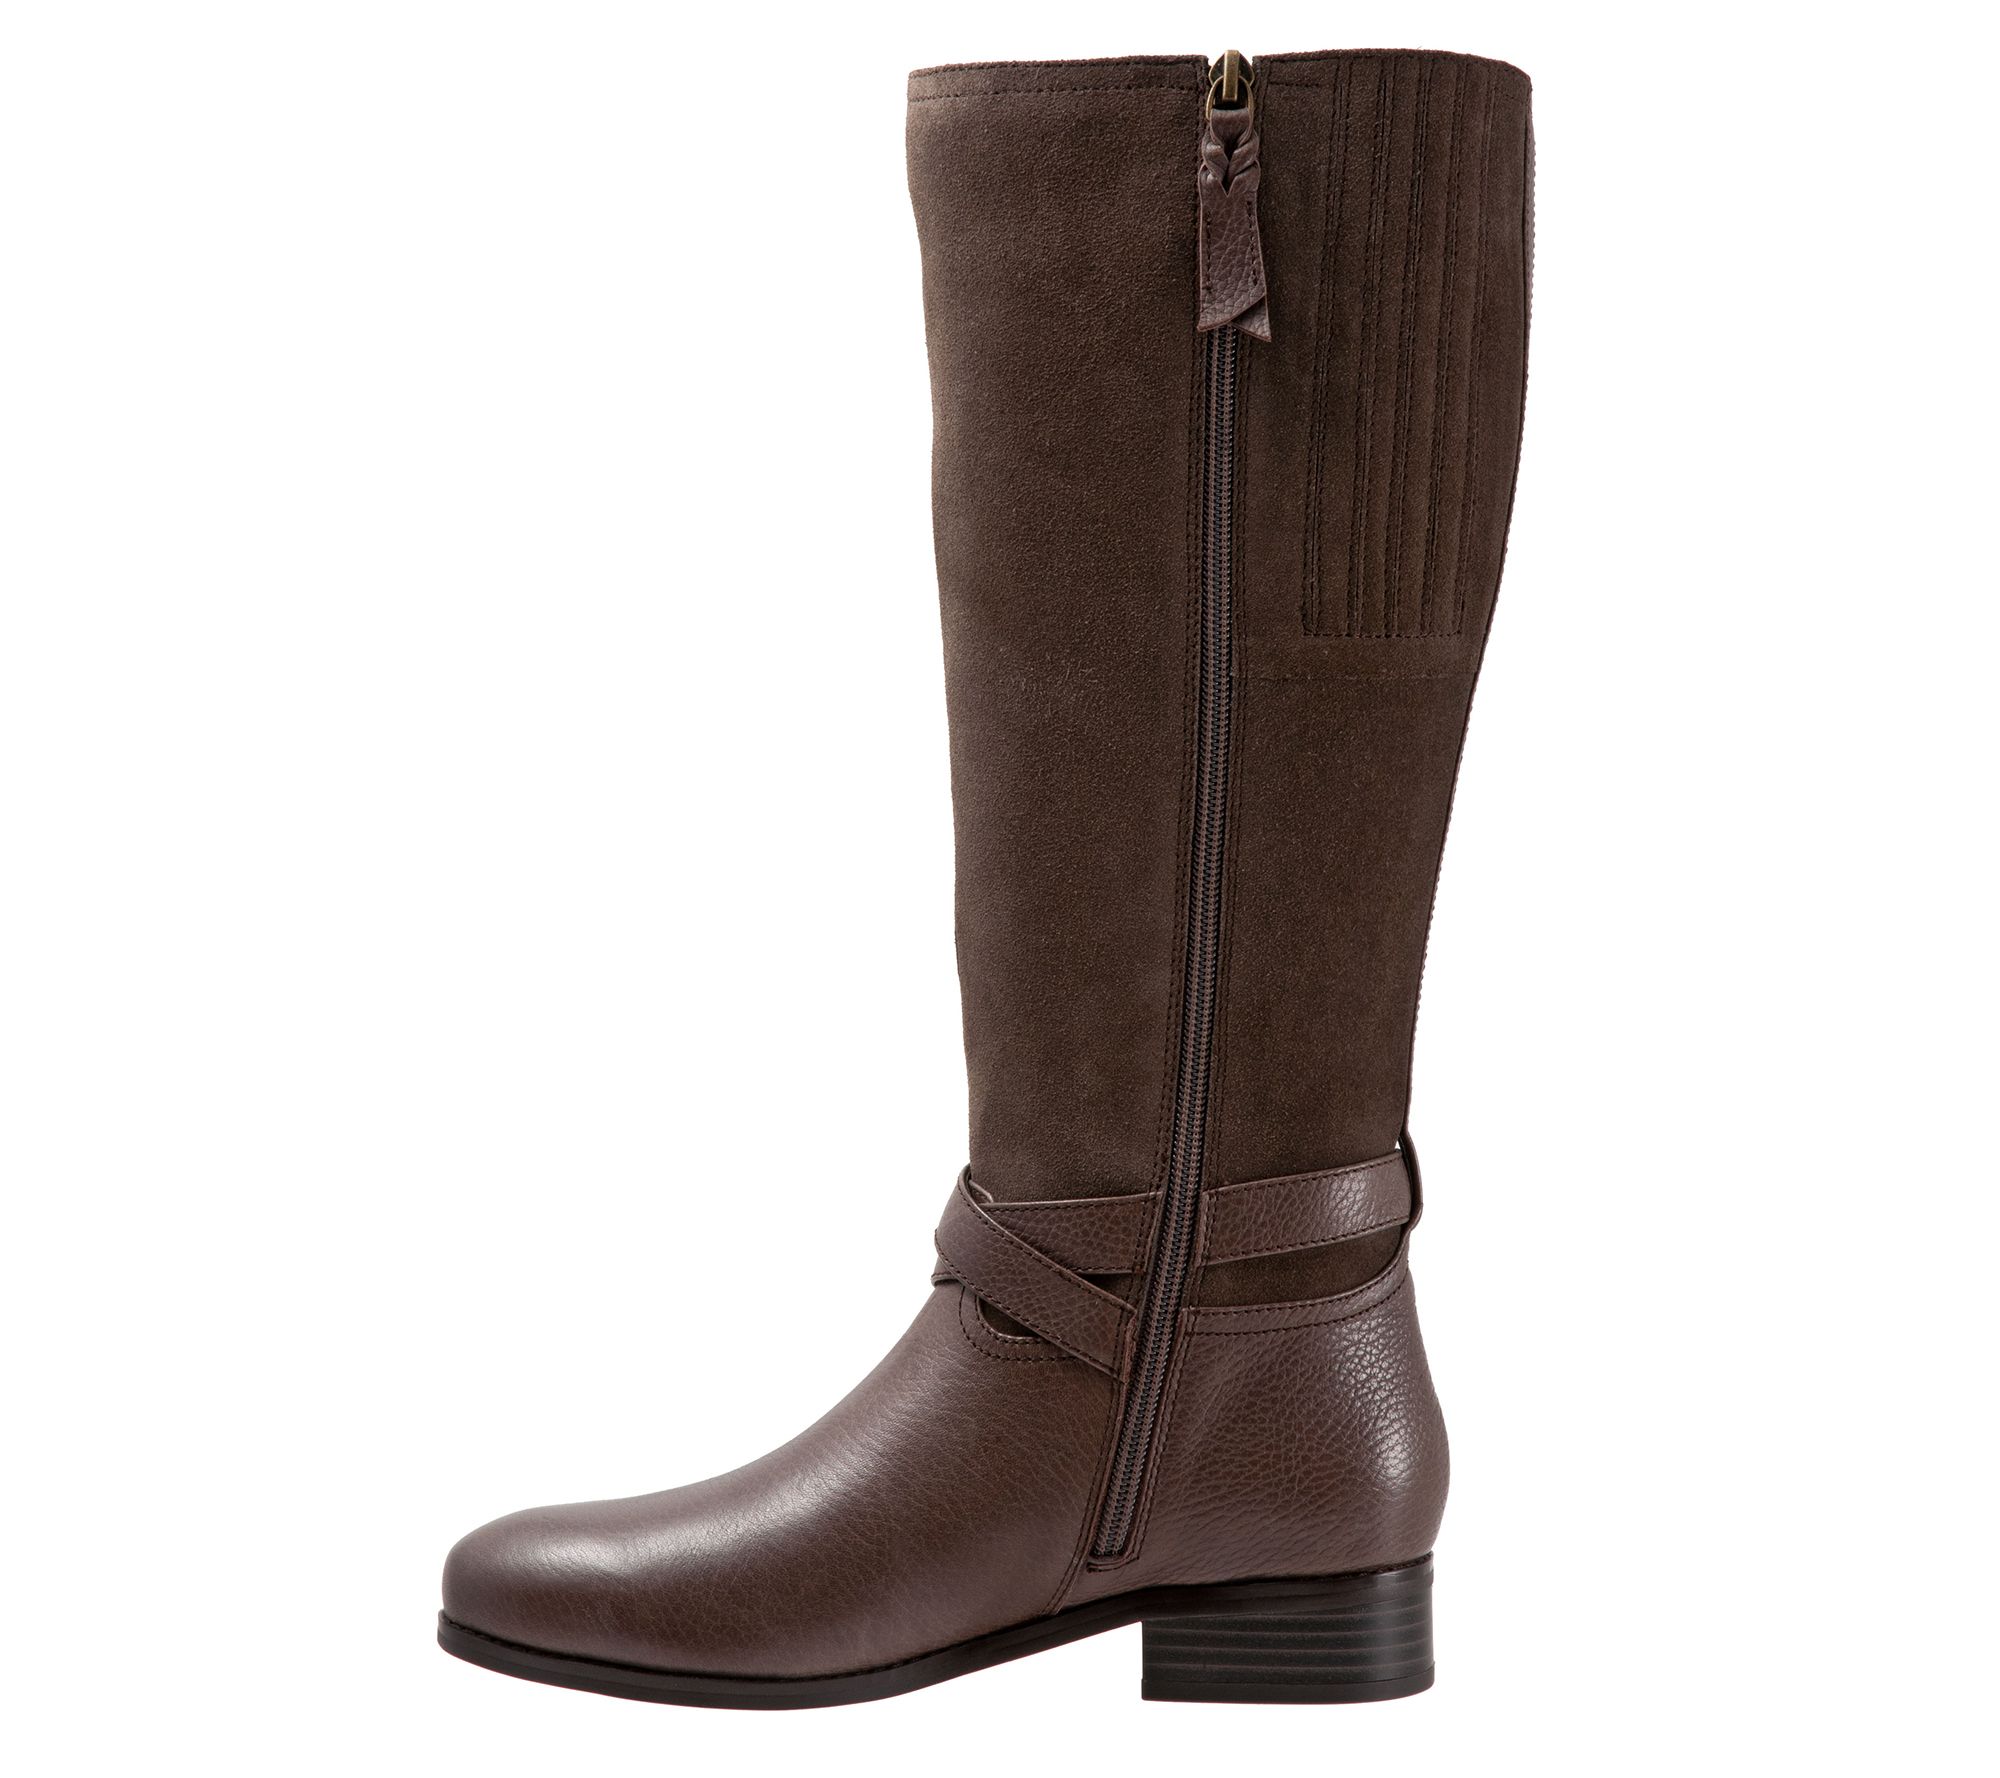 Trotters Tall Leather Wide Calf Boots - Larkin - QVC.com